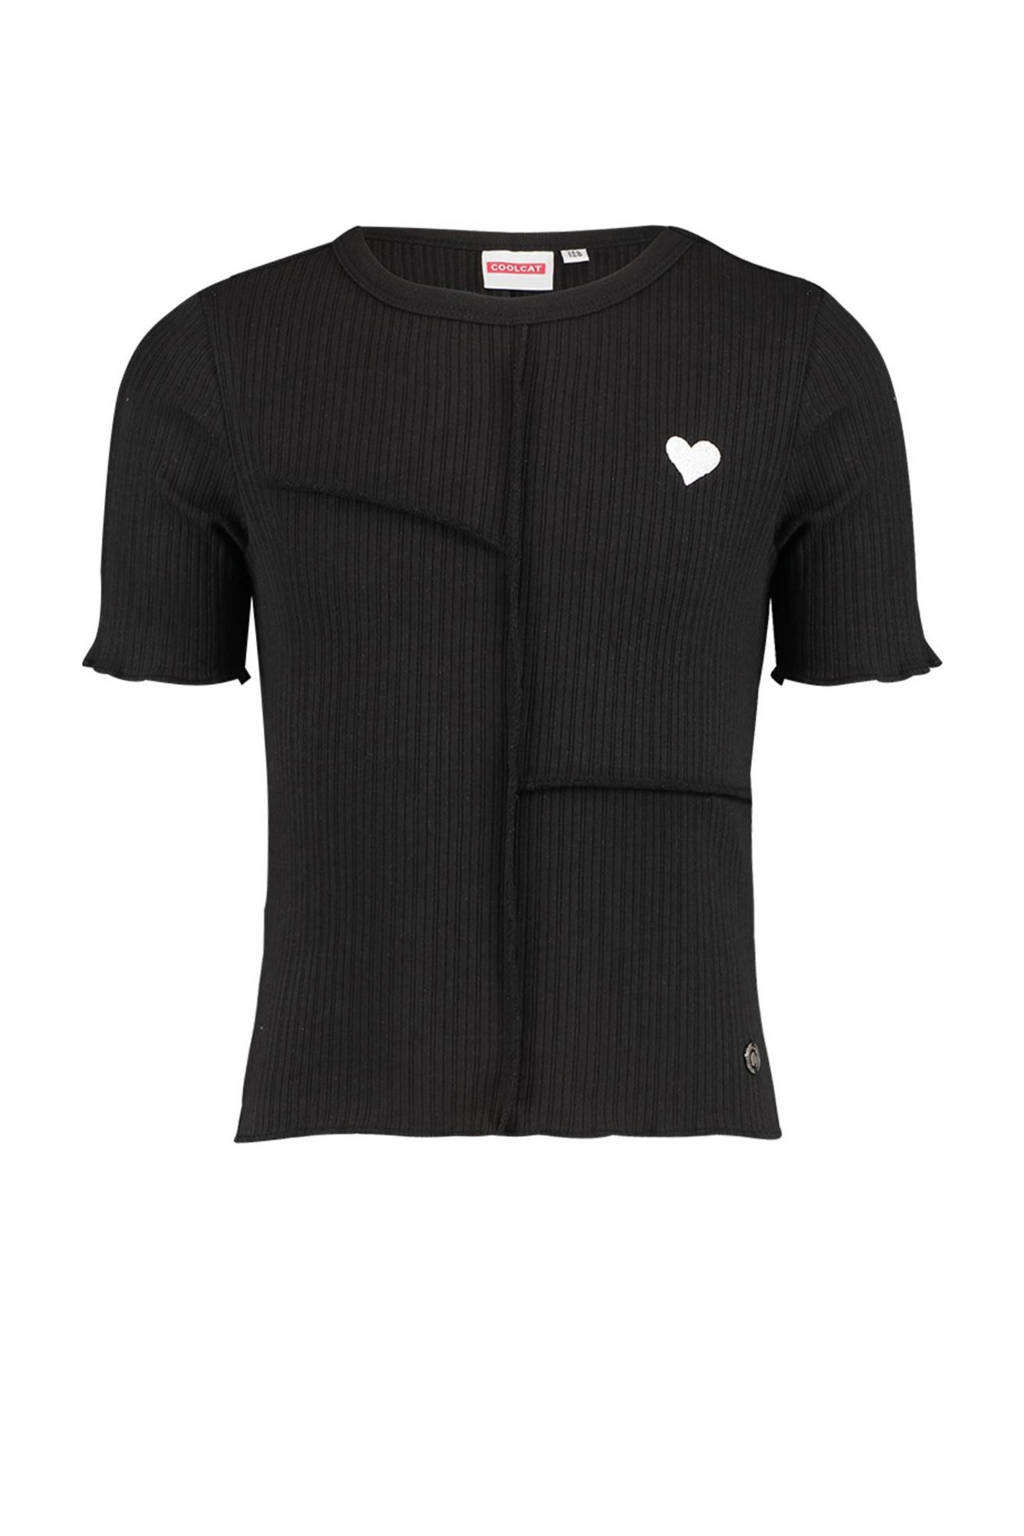 CoolCat Junior ribgebreid T-shirt Evy CG met printopdruk zwart